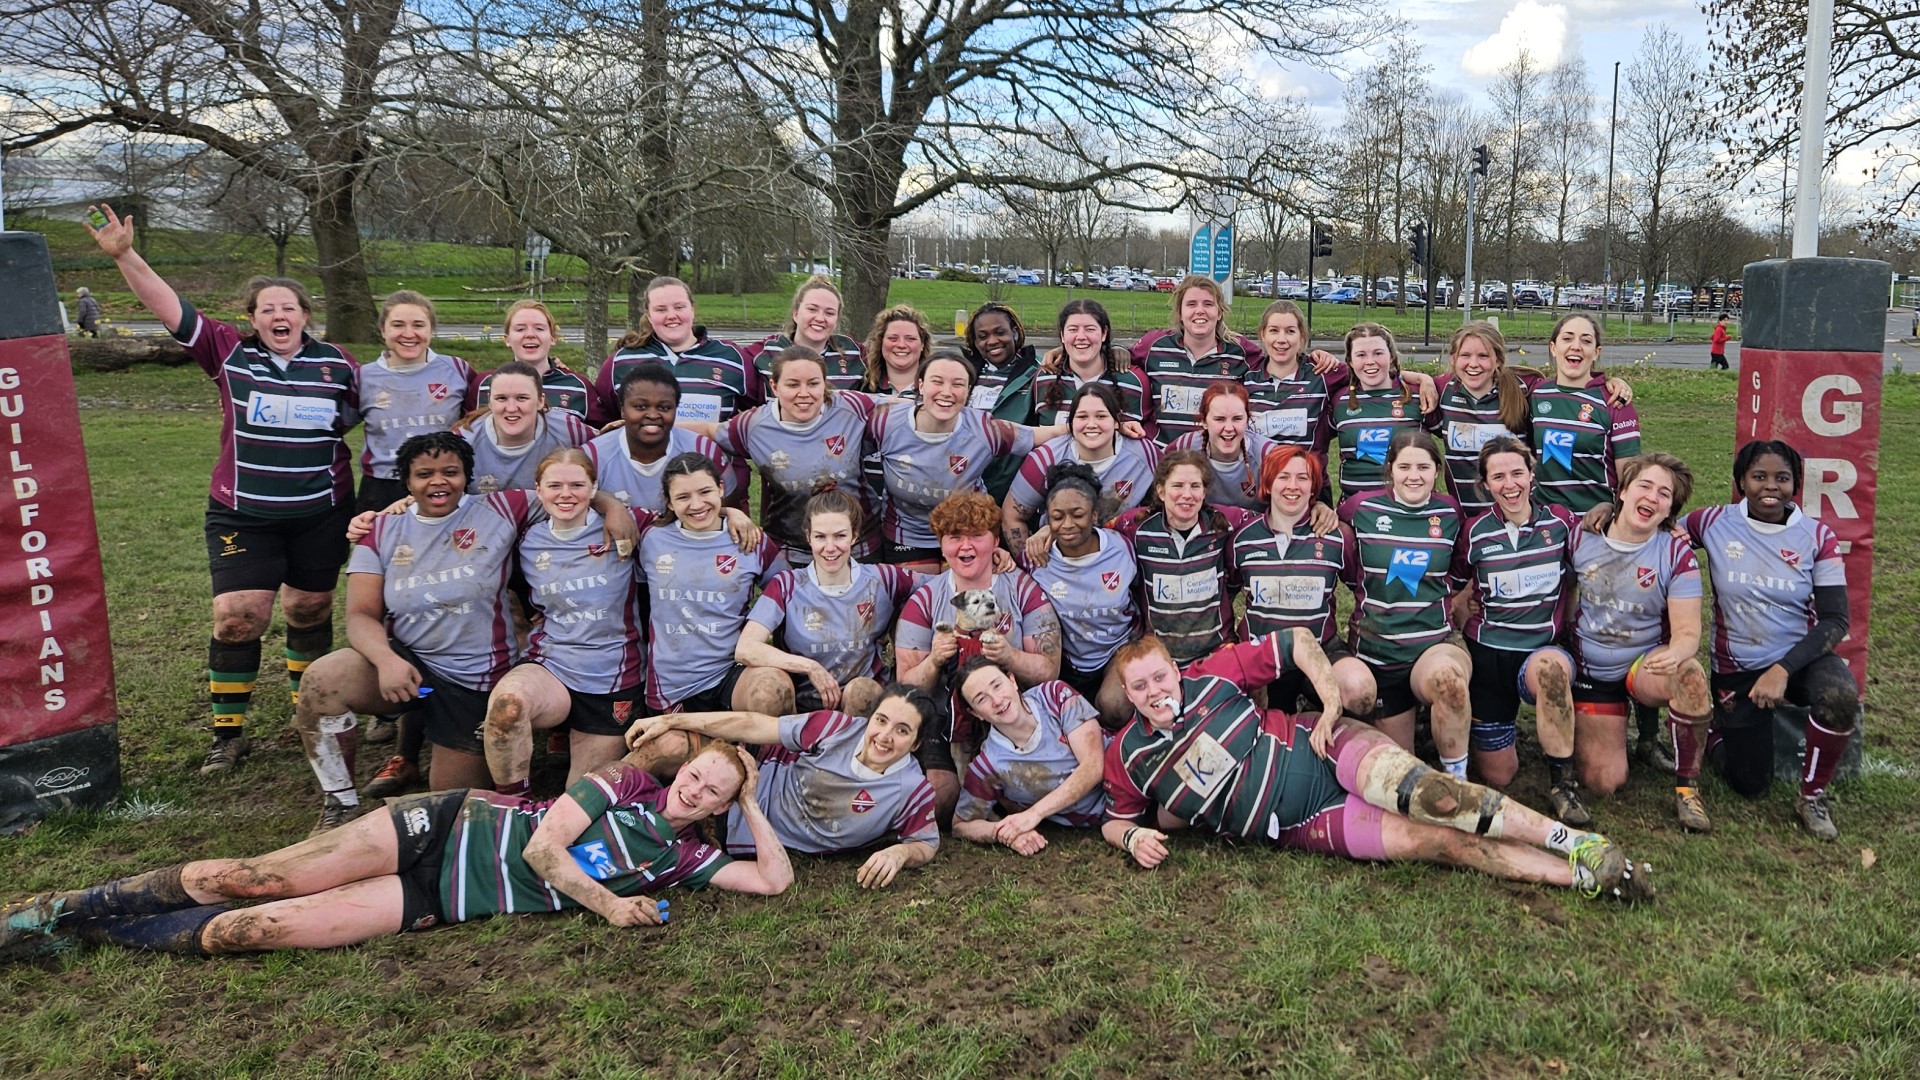 Guildforians RFC - Women's Rugby